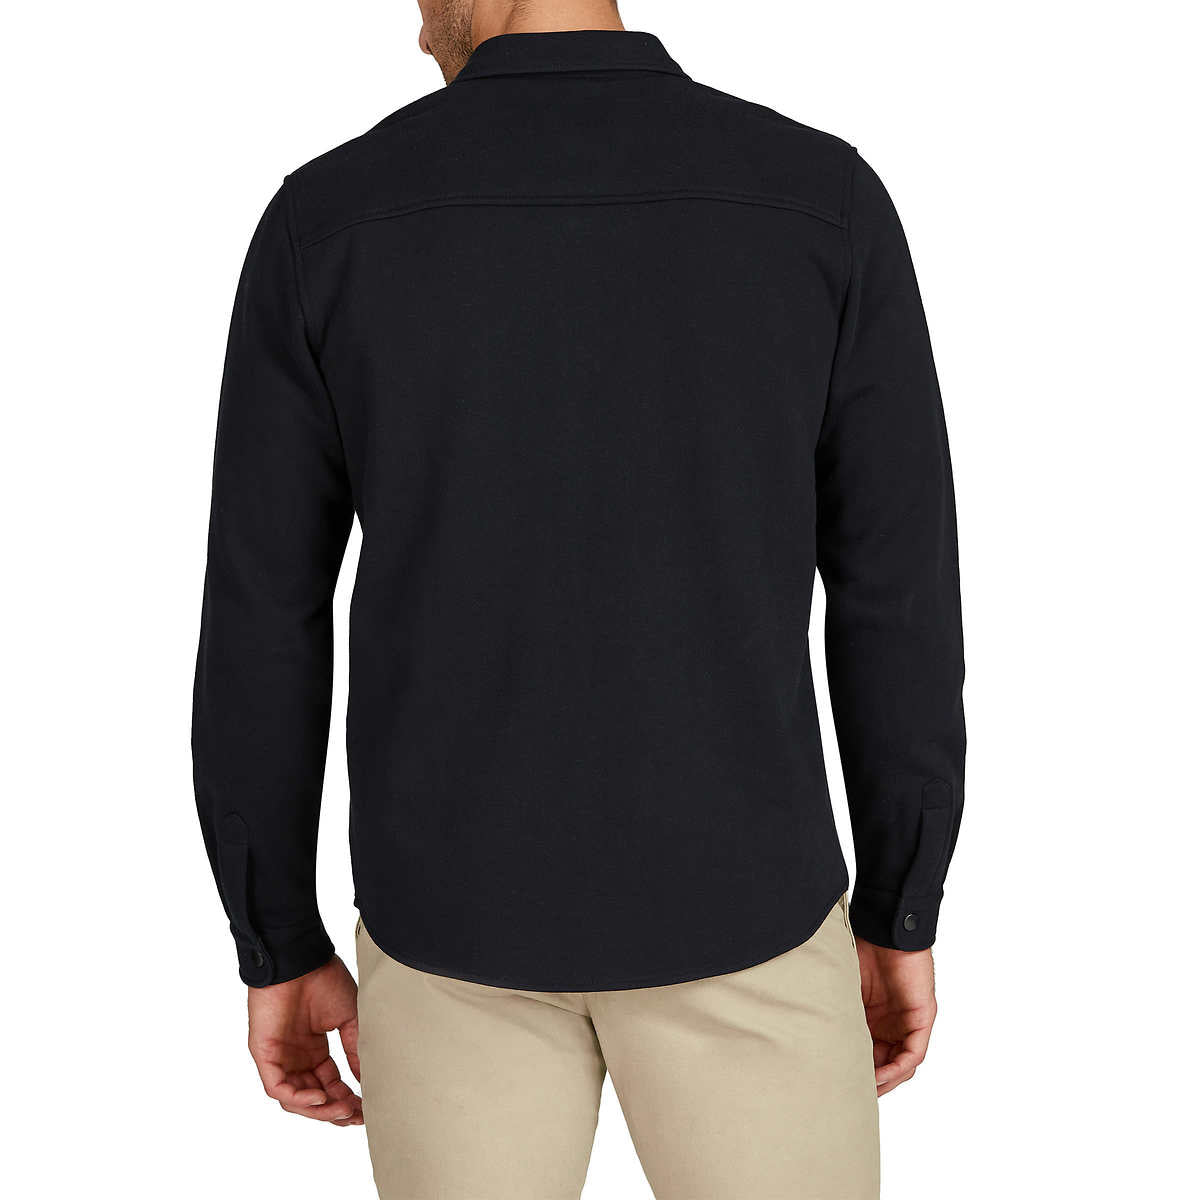 frankbyfrankandoak-veste-chemise-tricot-lourd-homme-men-heavy-knit-jacket-2